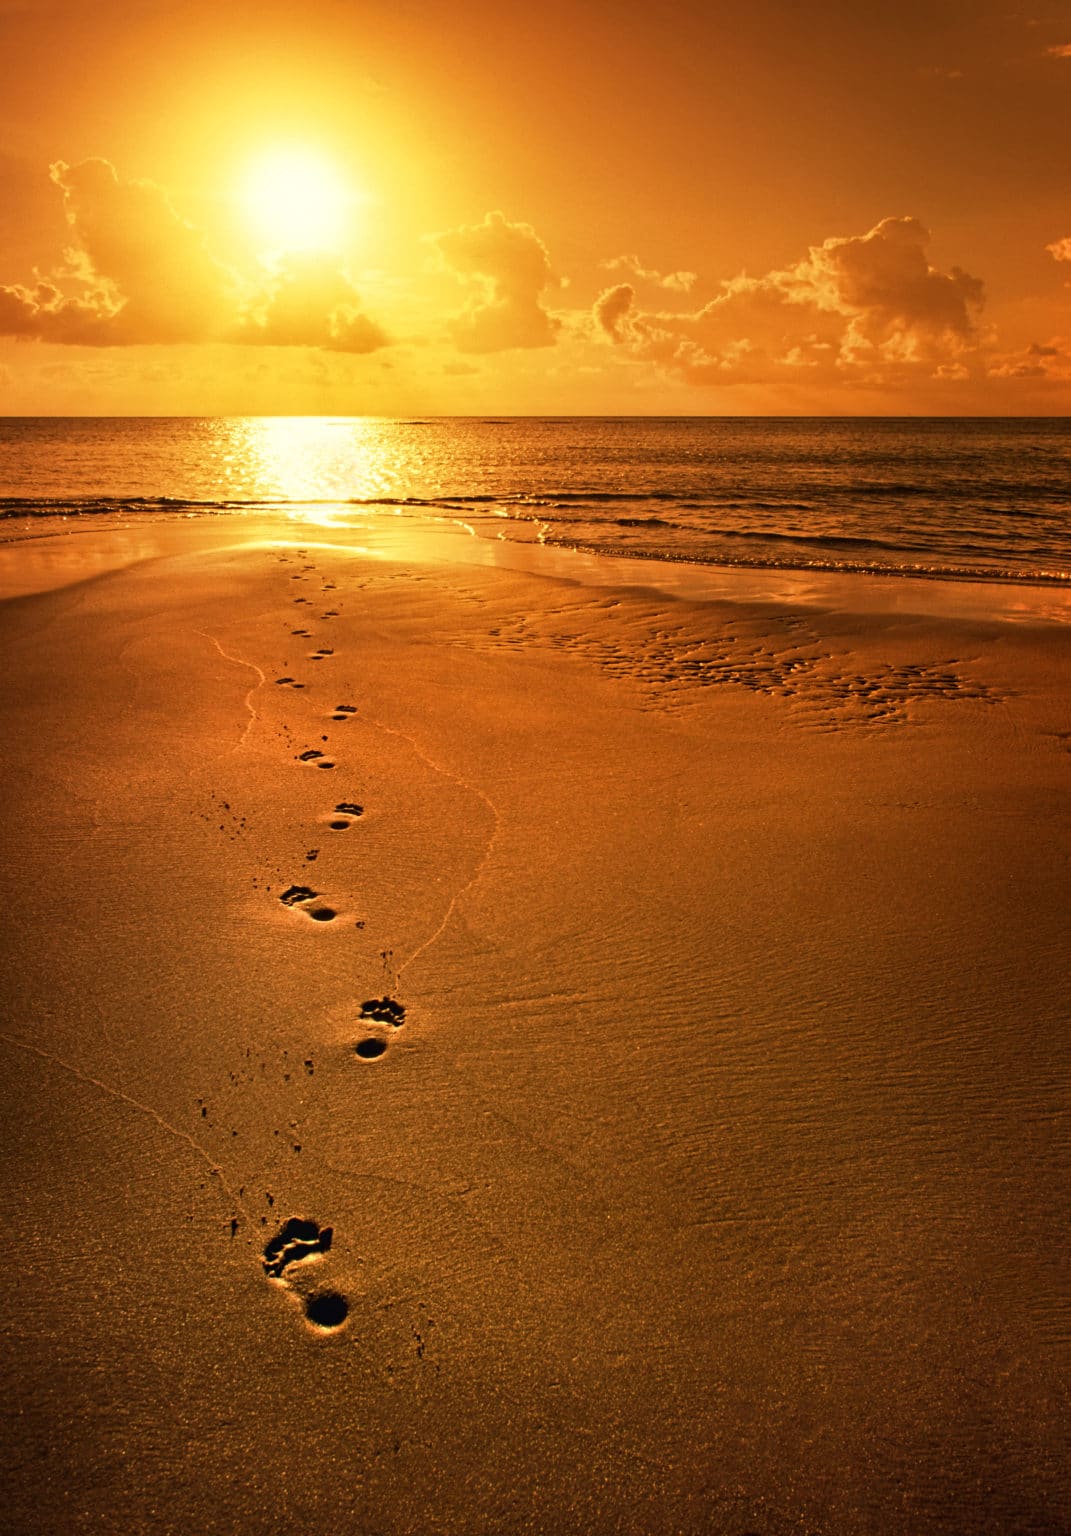 footprints-in-the-sand-poem-gospelchops